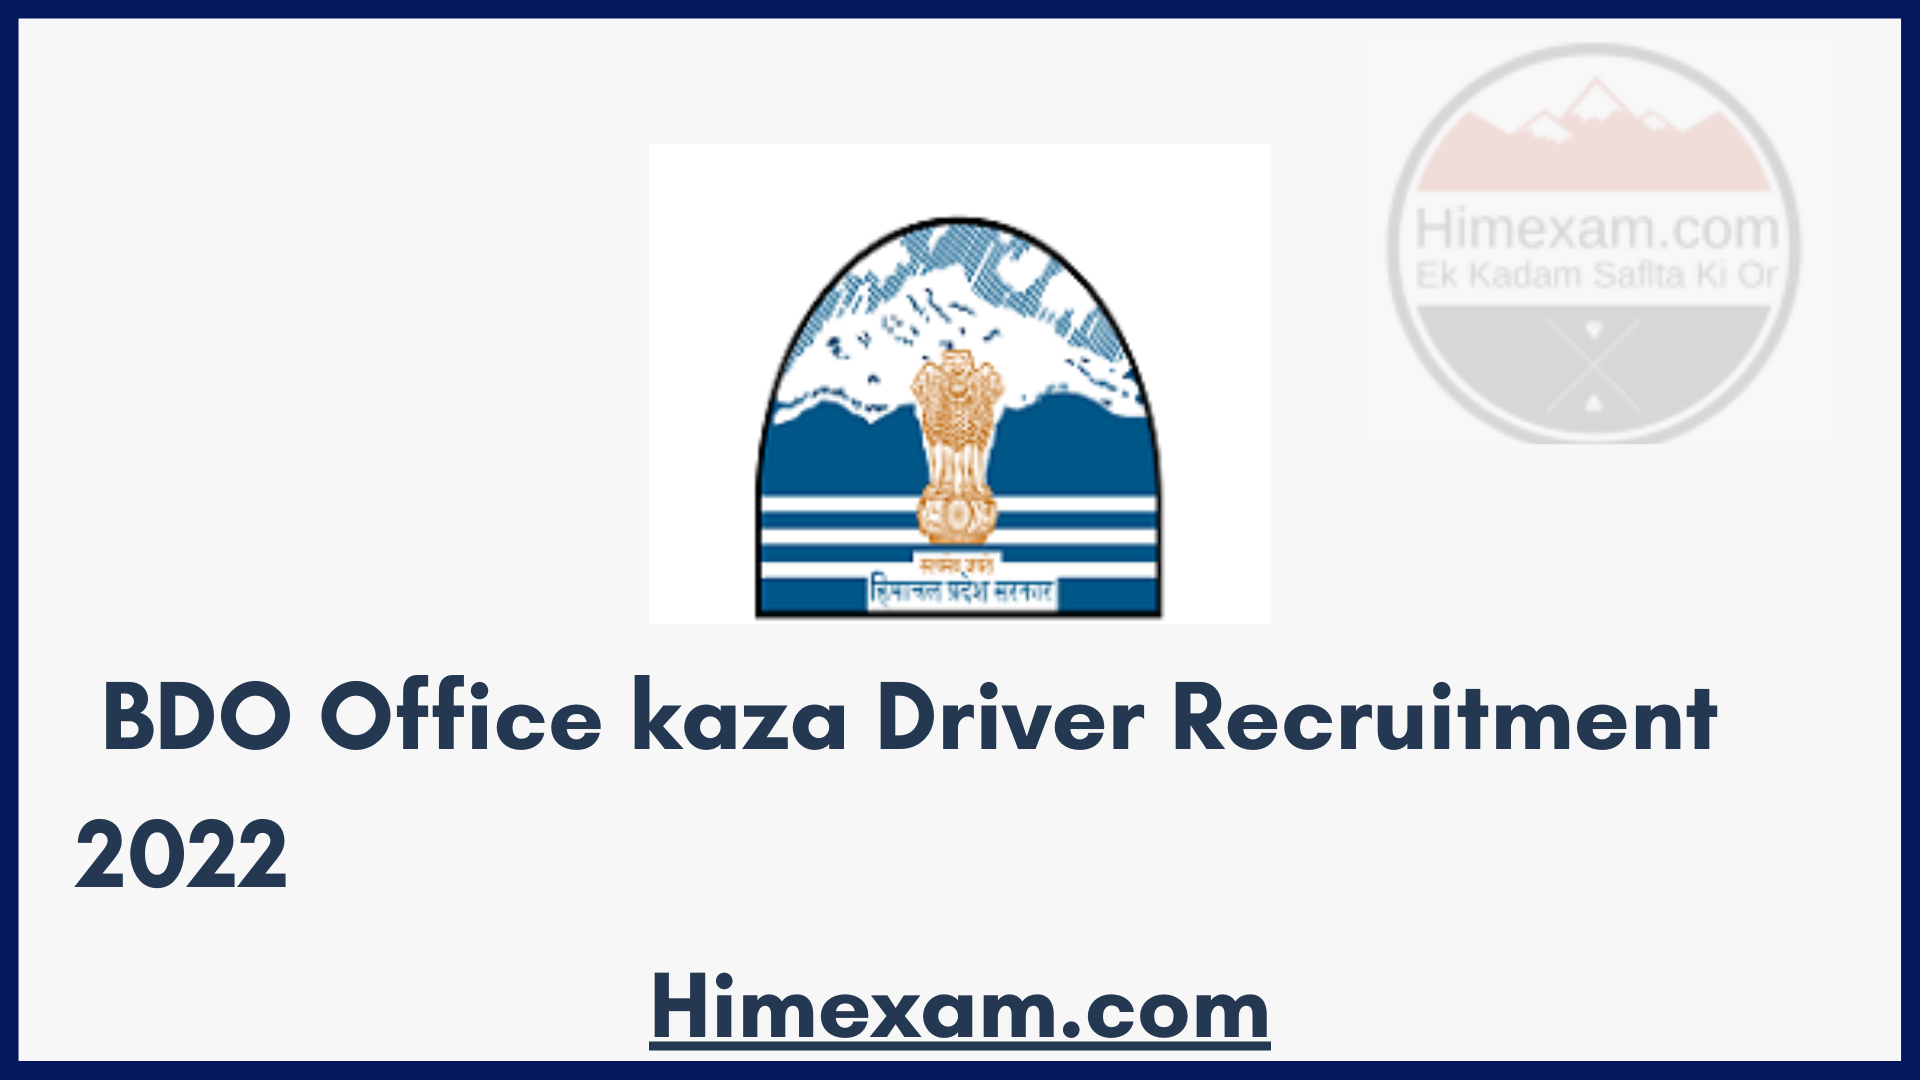 BDO Office kaza Driver Recruitment 2022